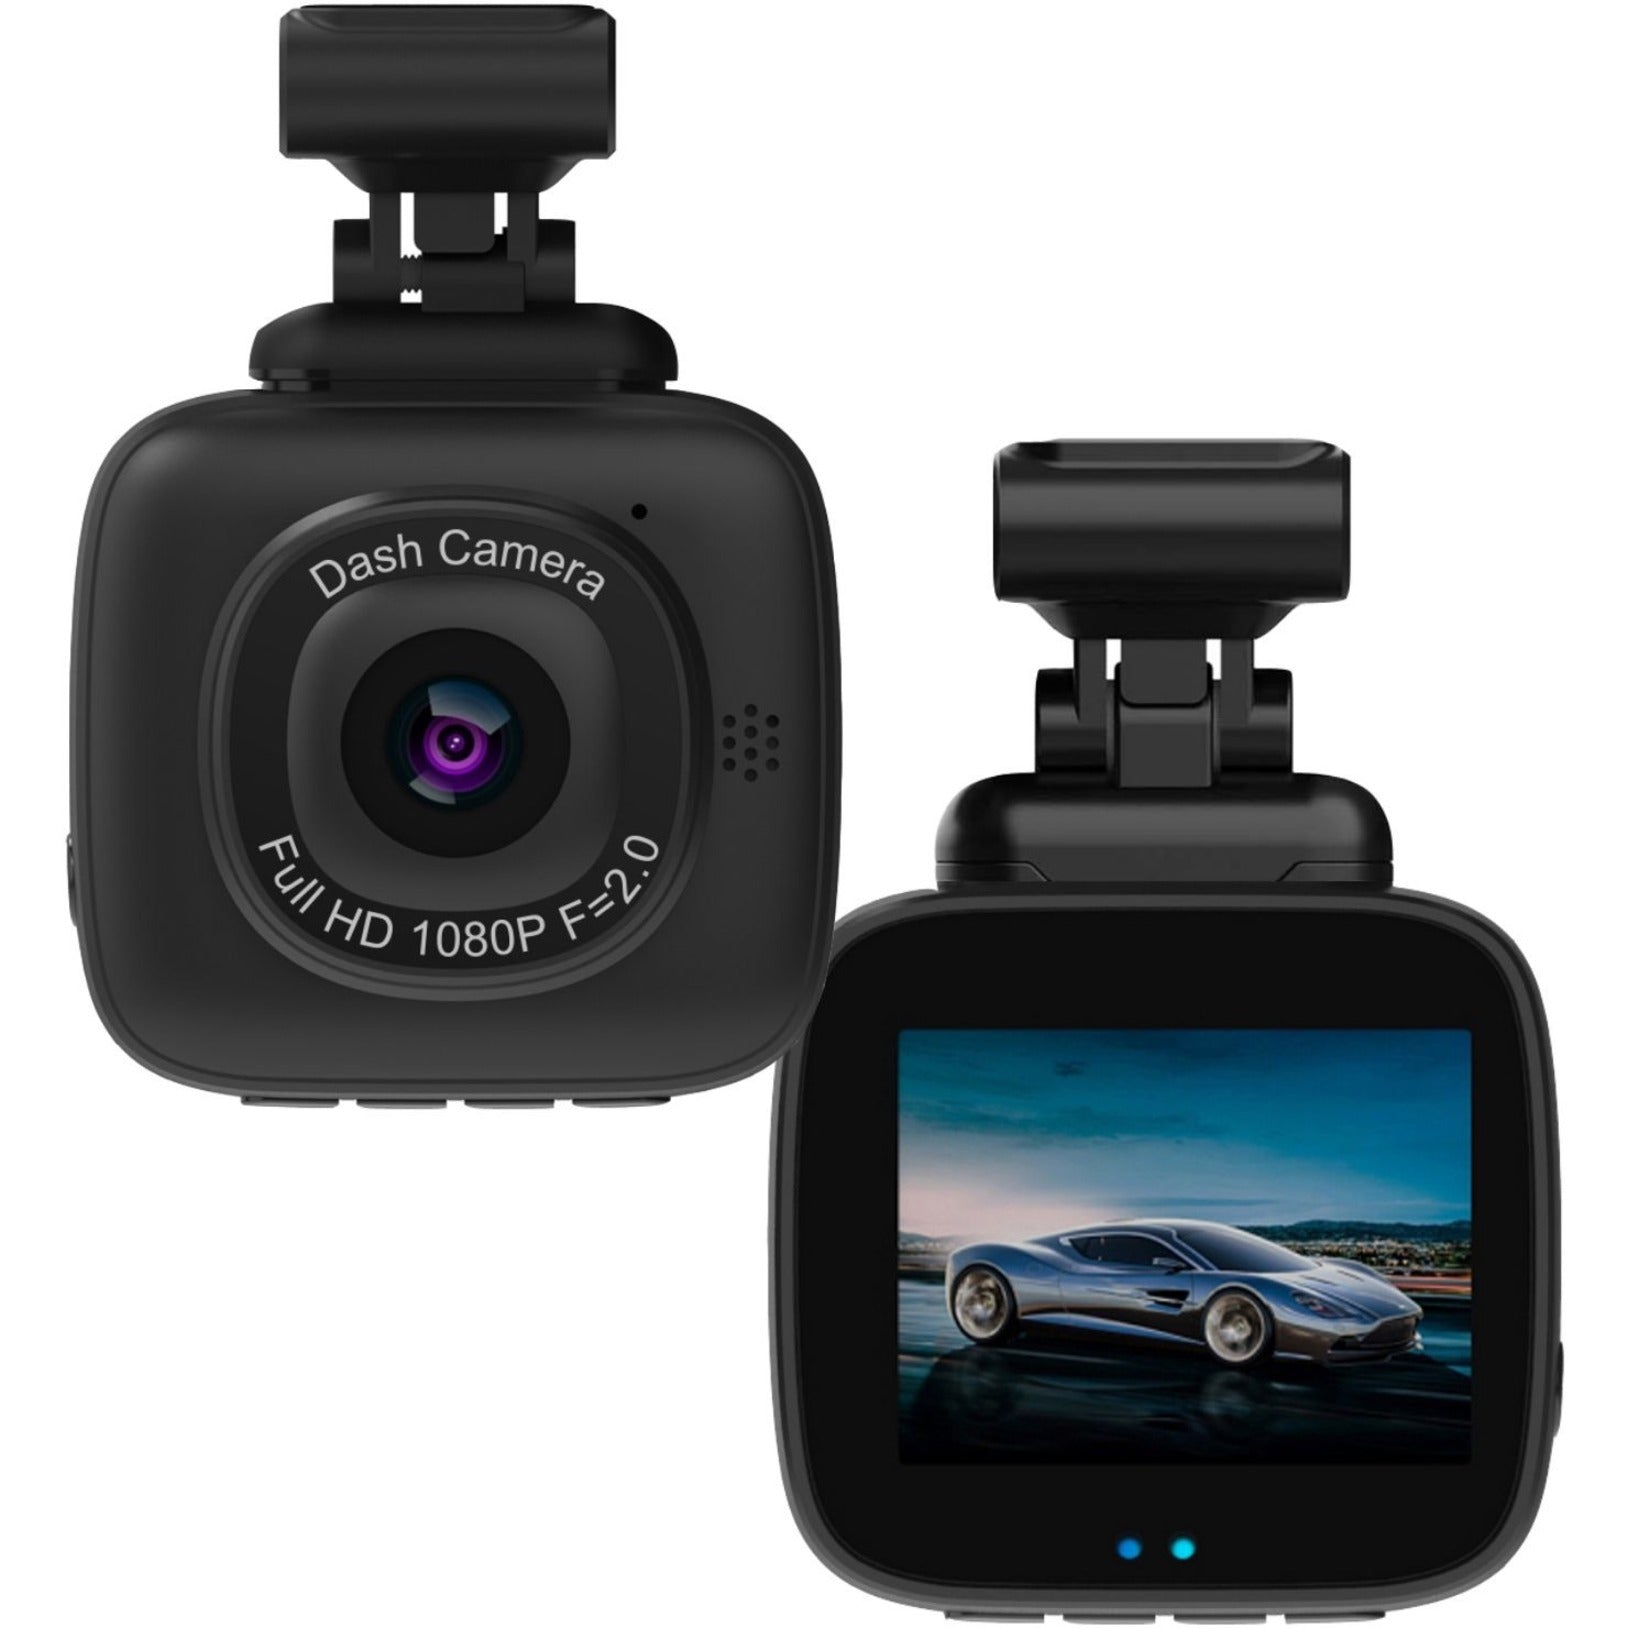 myGEKOgear GO5008G Orbit 500 Vehicle Camera, Full HD 1080p, Wi-Fi Dash Cam with OBD II Cable